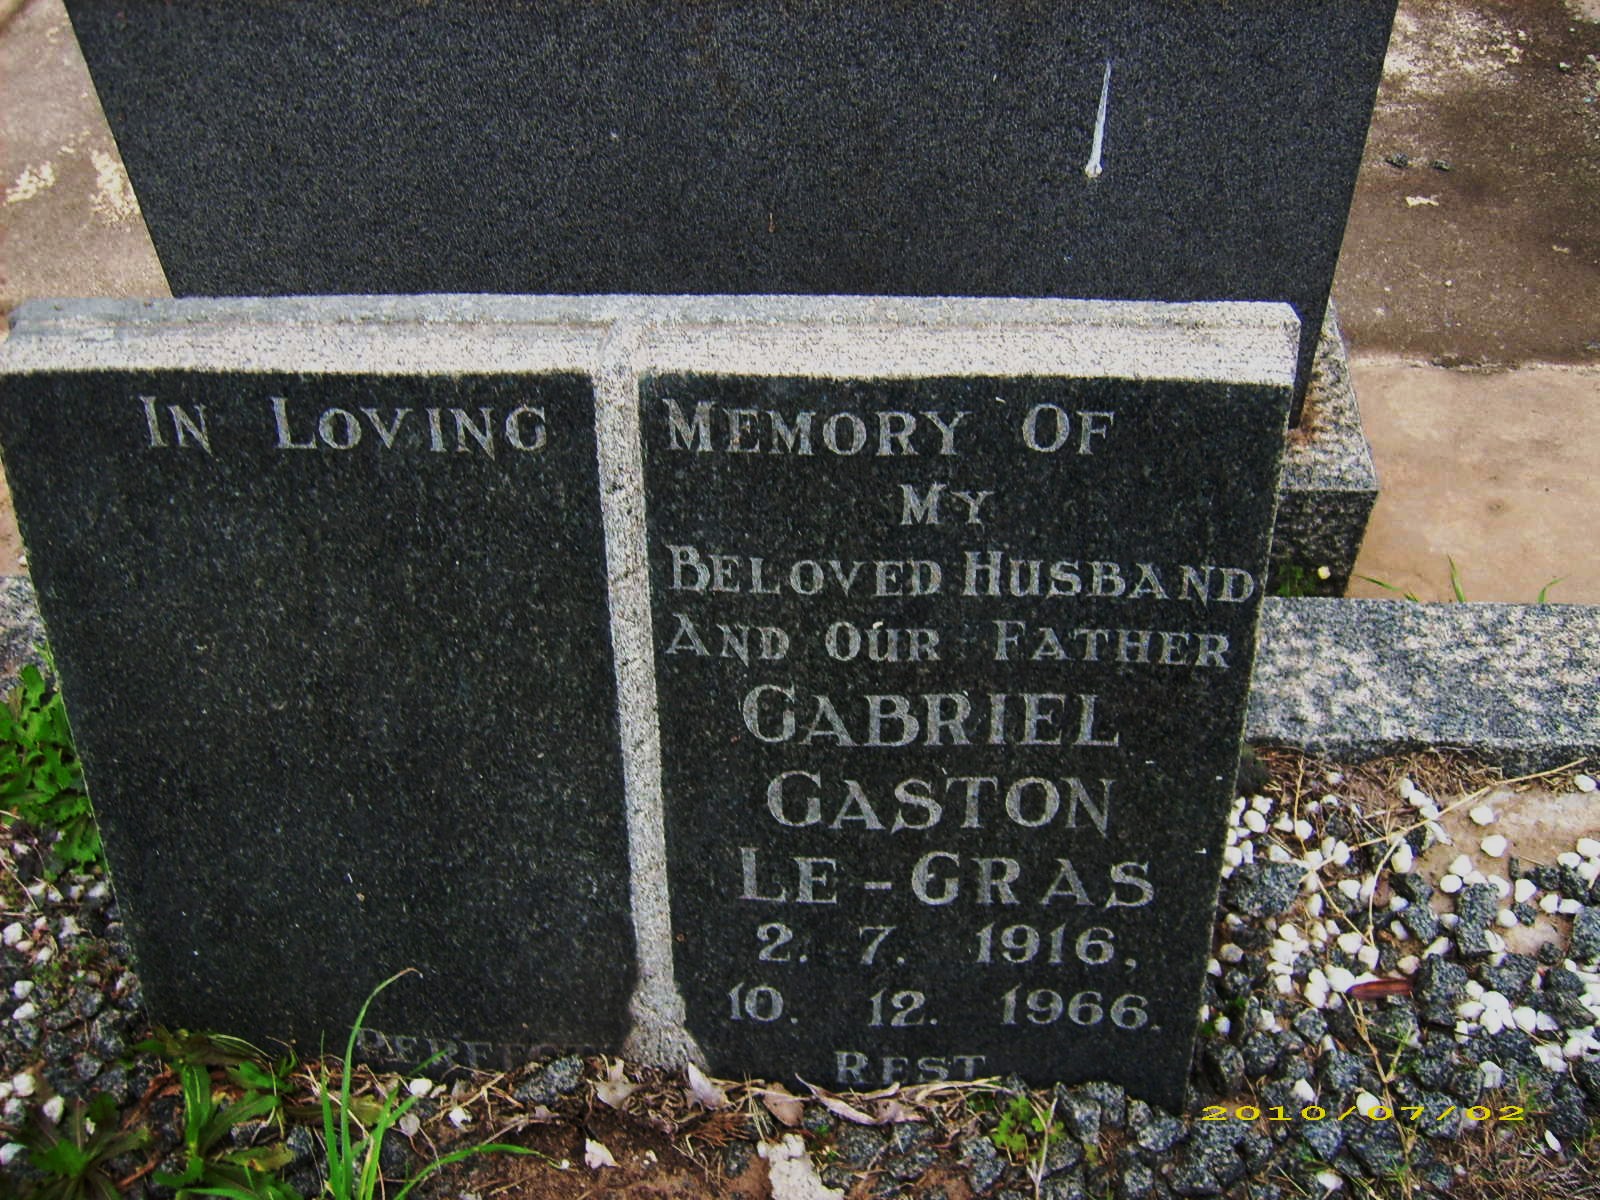 LE-GRAS Gabriel Gaston 1916-1966